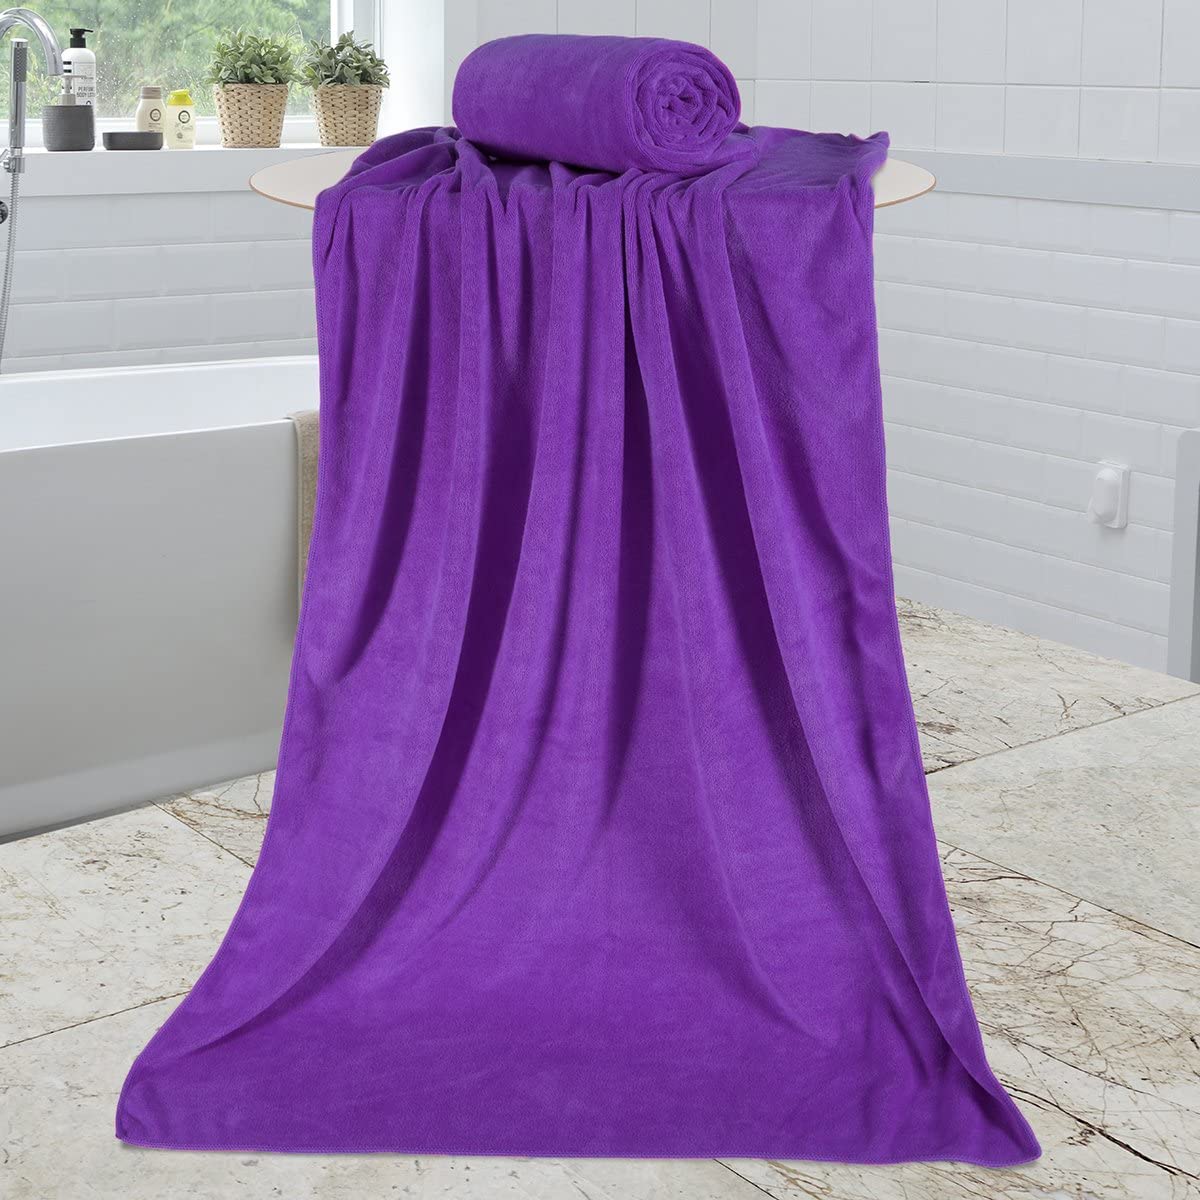 Travel Towel - Ultra Soft Microfiber Camping Towel